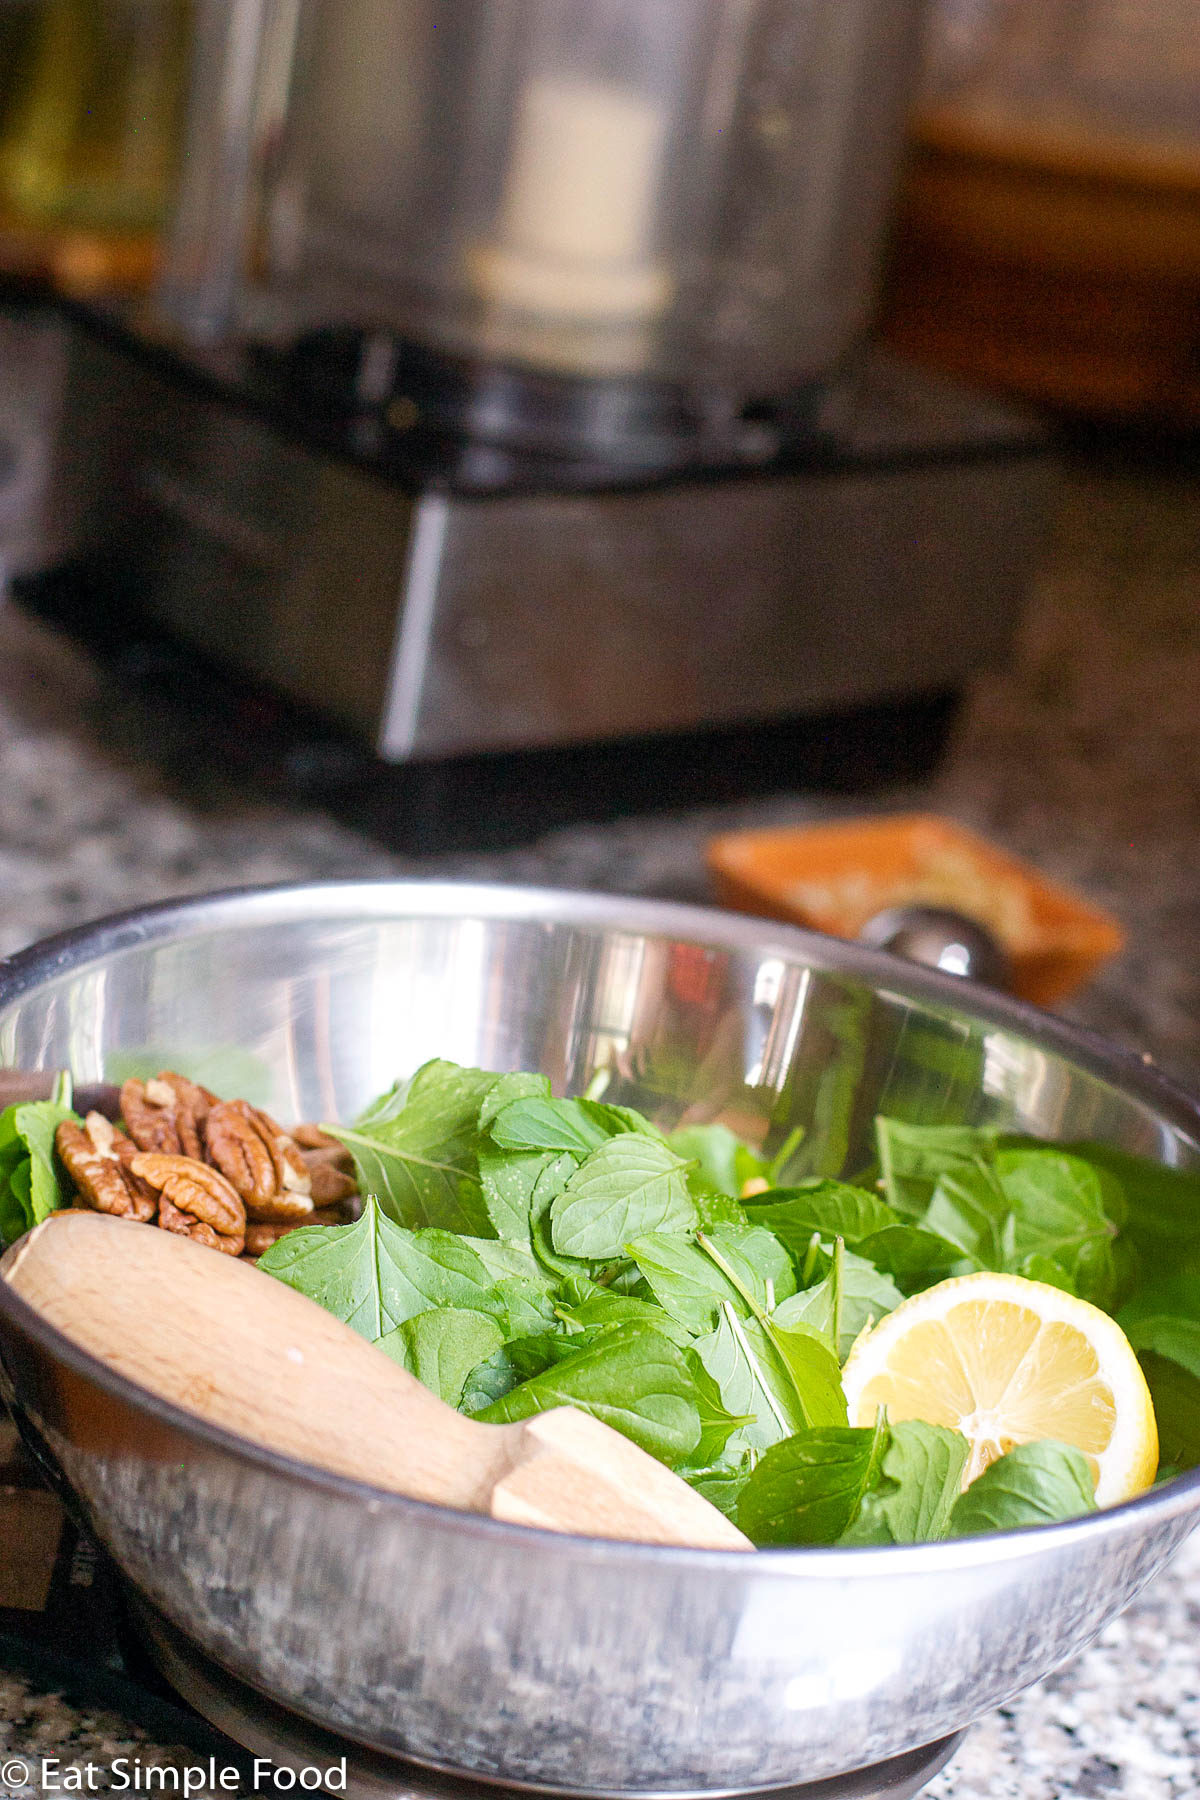 Stainless steel bowl of raw ingredients for mint pesto: mint, lemon, pecans, garlic. Wood handheld lemon juicer in bowl.